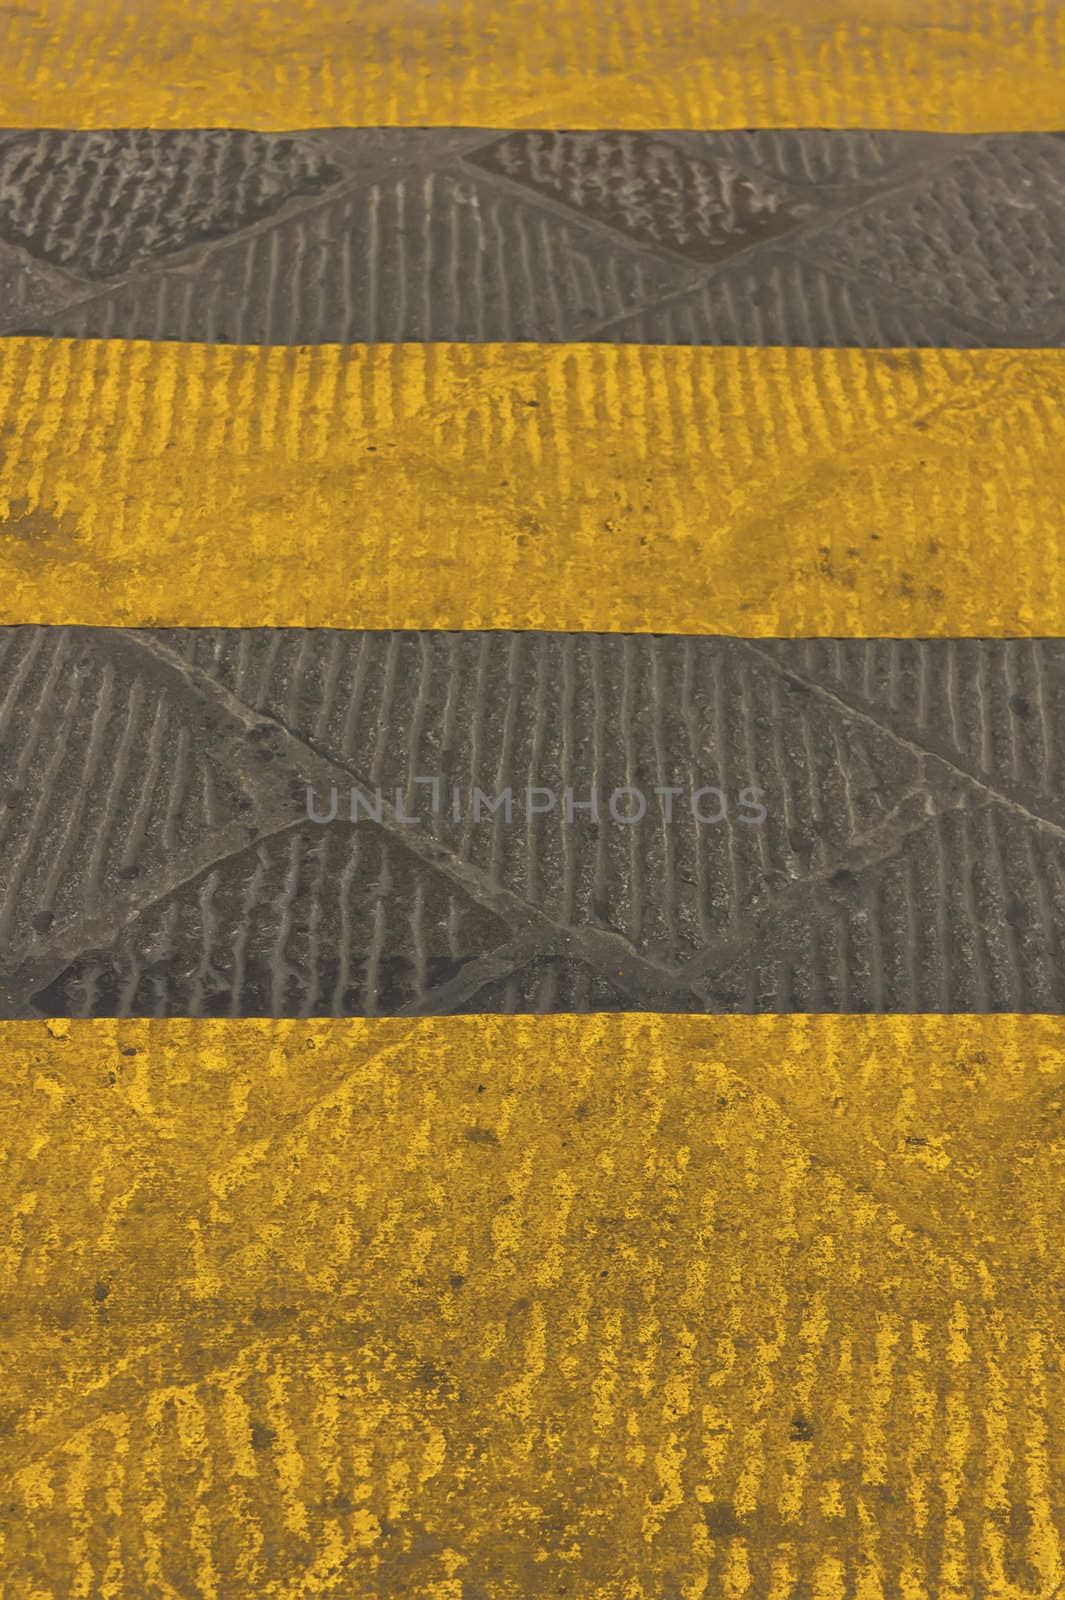 Crosswalk with yellow stripes on stone pavement.